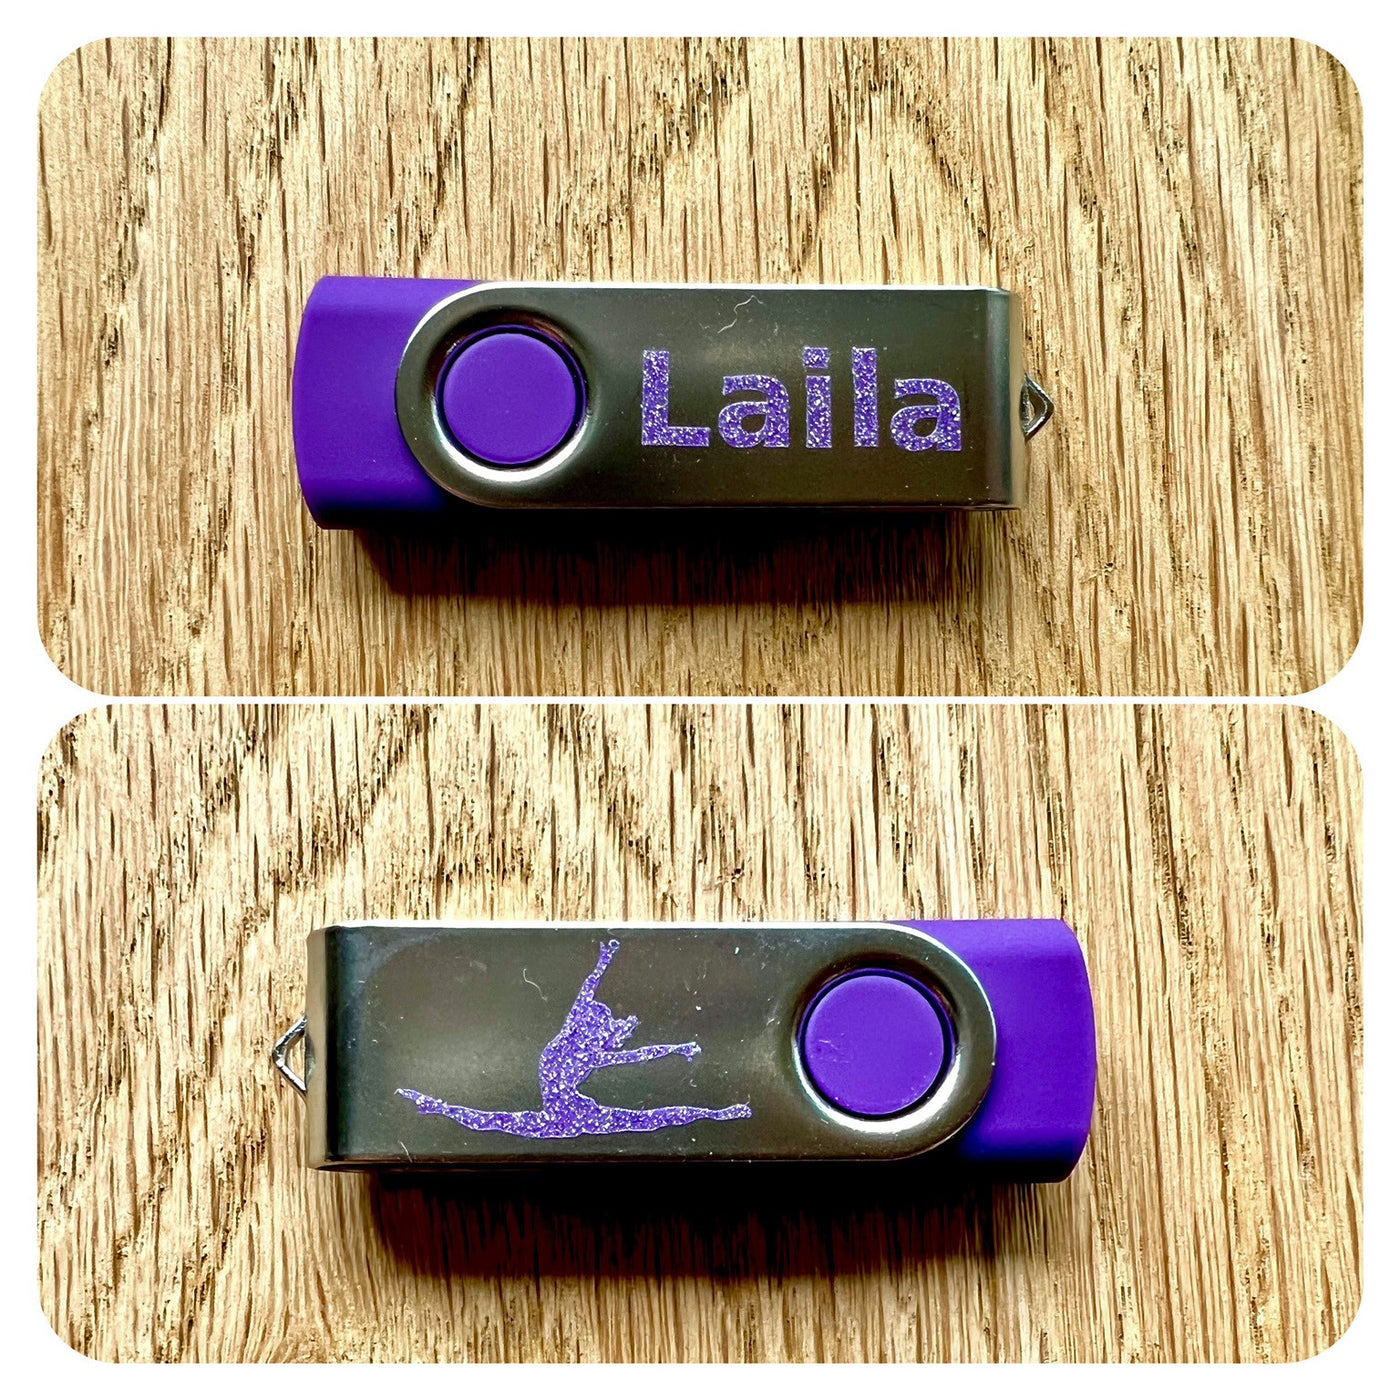 USB Stick mit Turnerin oder Namen